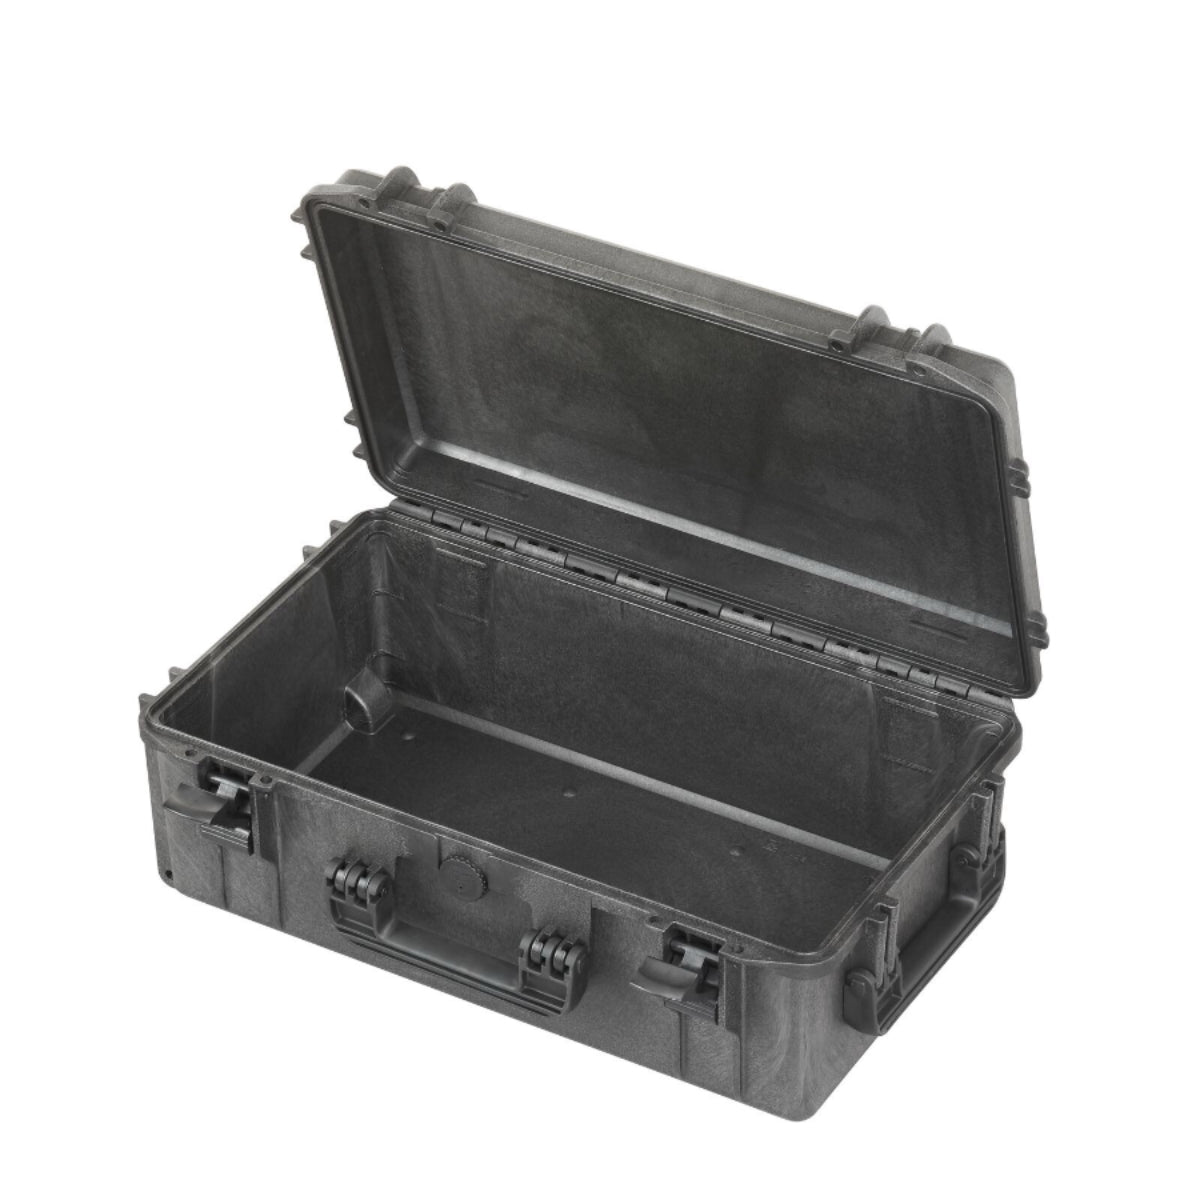 SP PRO 520 Black Carry Case, Empty w/ Convoluted Foam in Lid, ID: L520xW290xH200mm